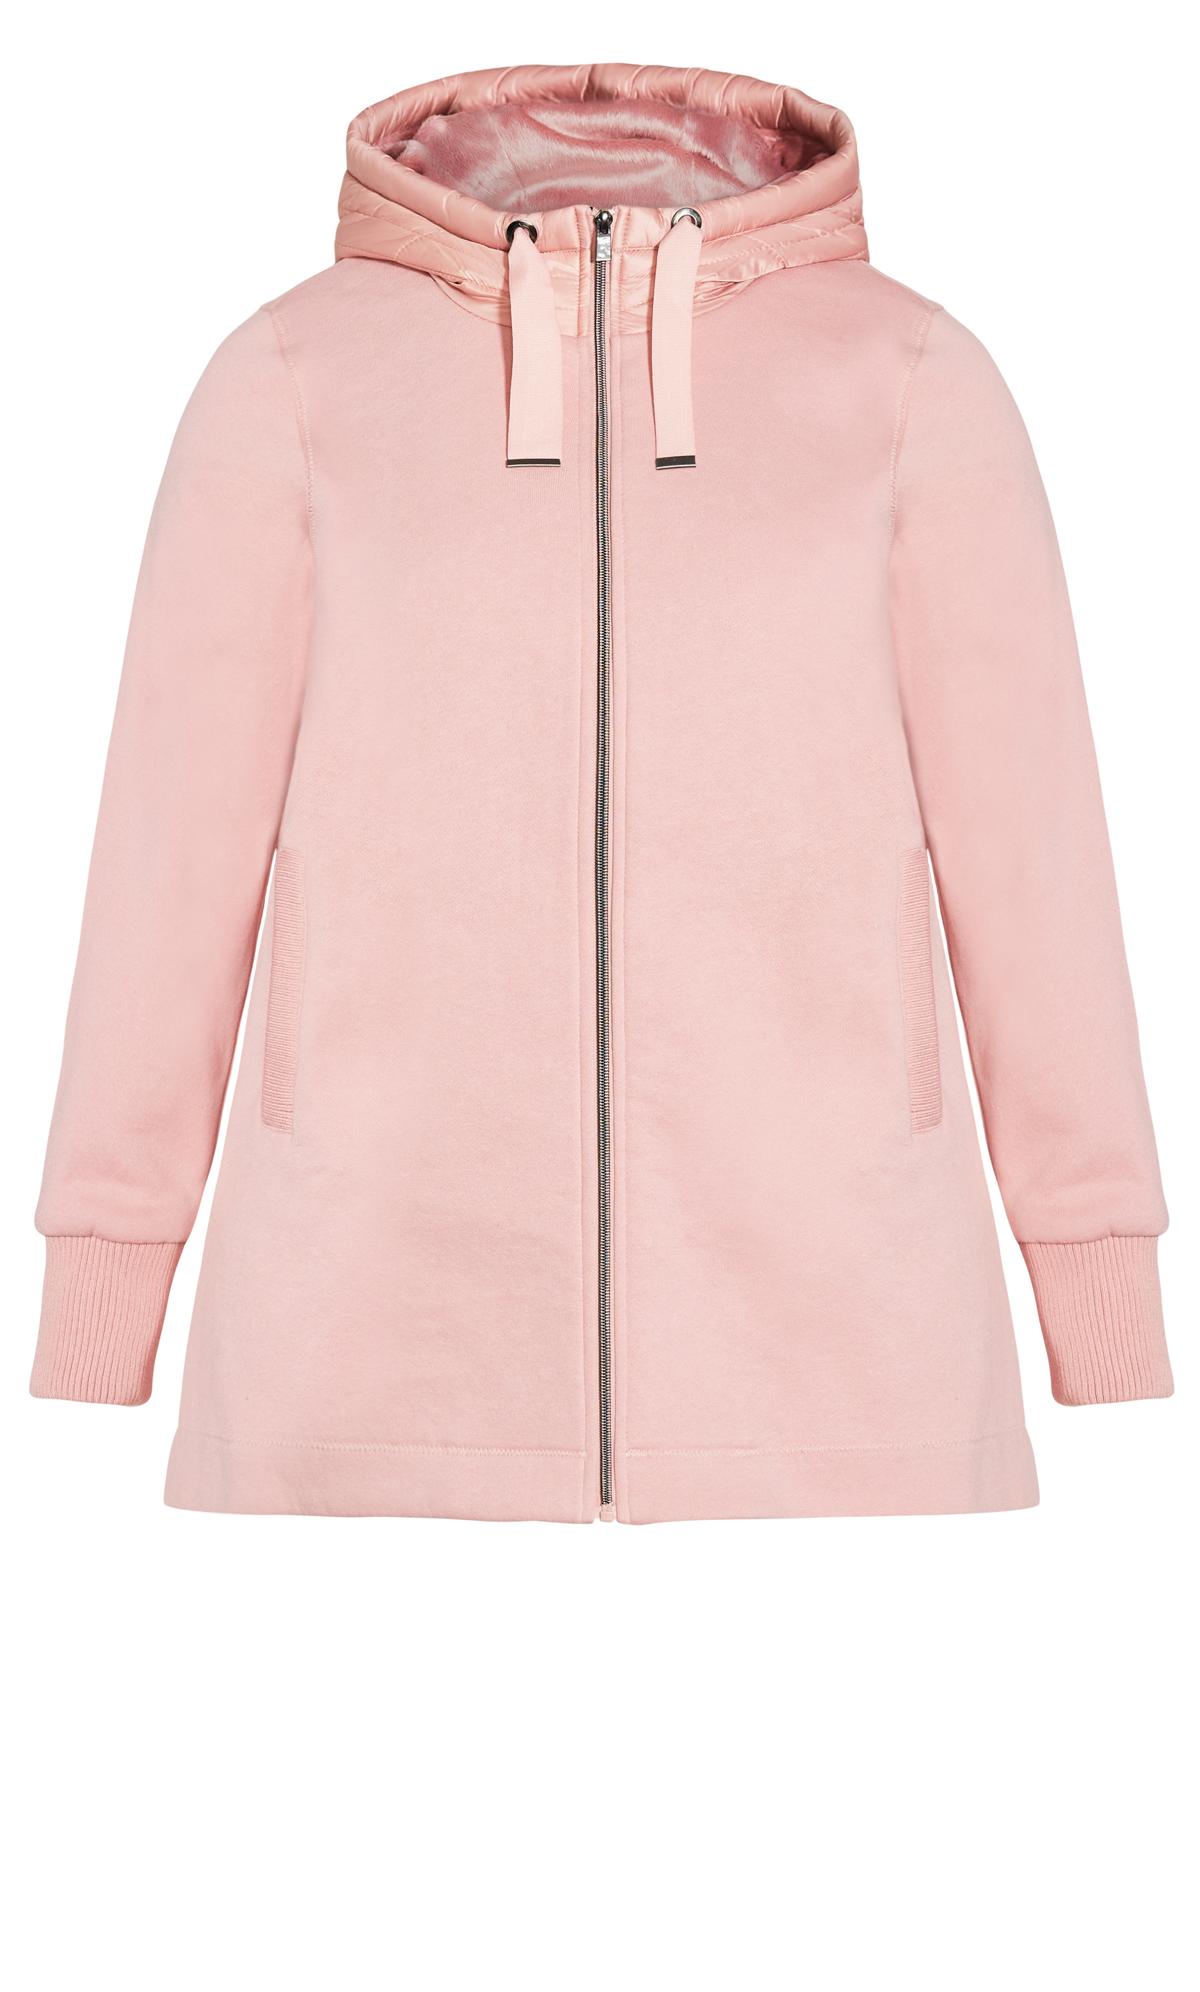 Evans Pink Fleece Hood Fashion Coat 2